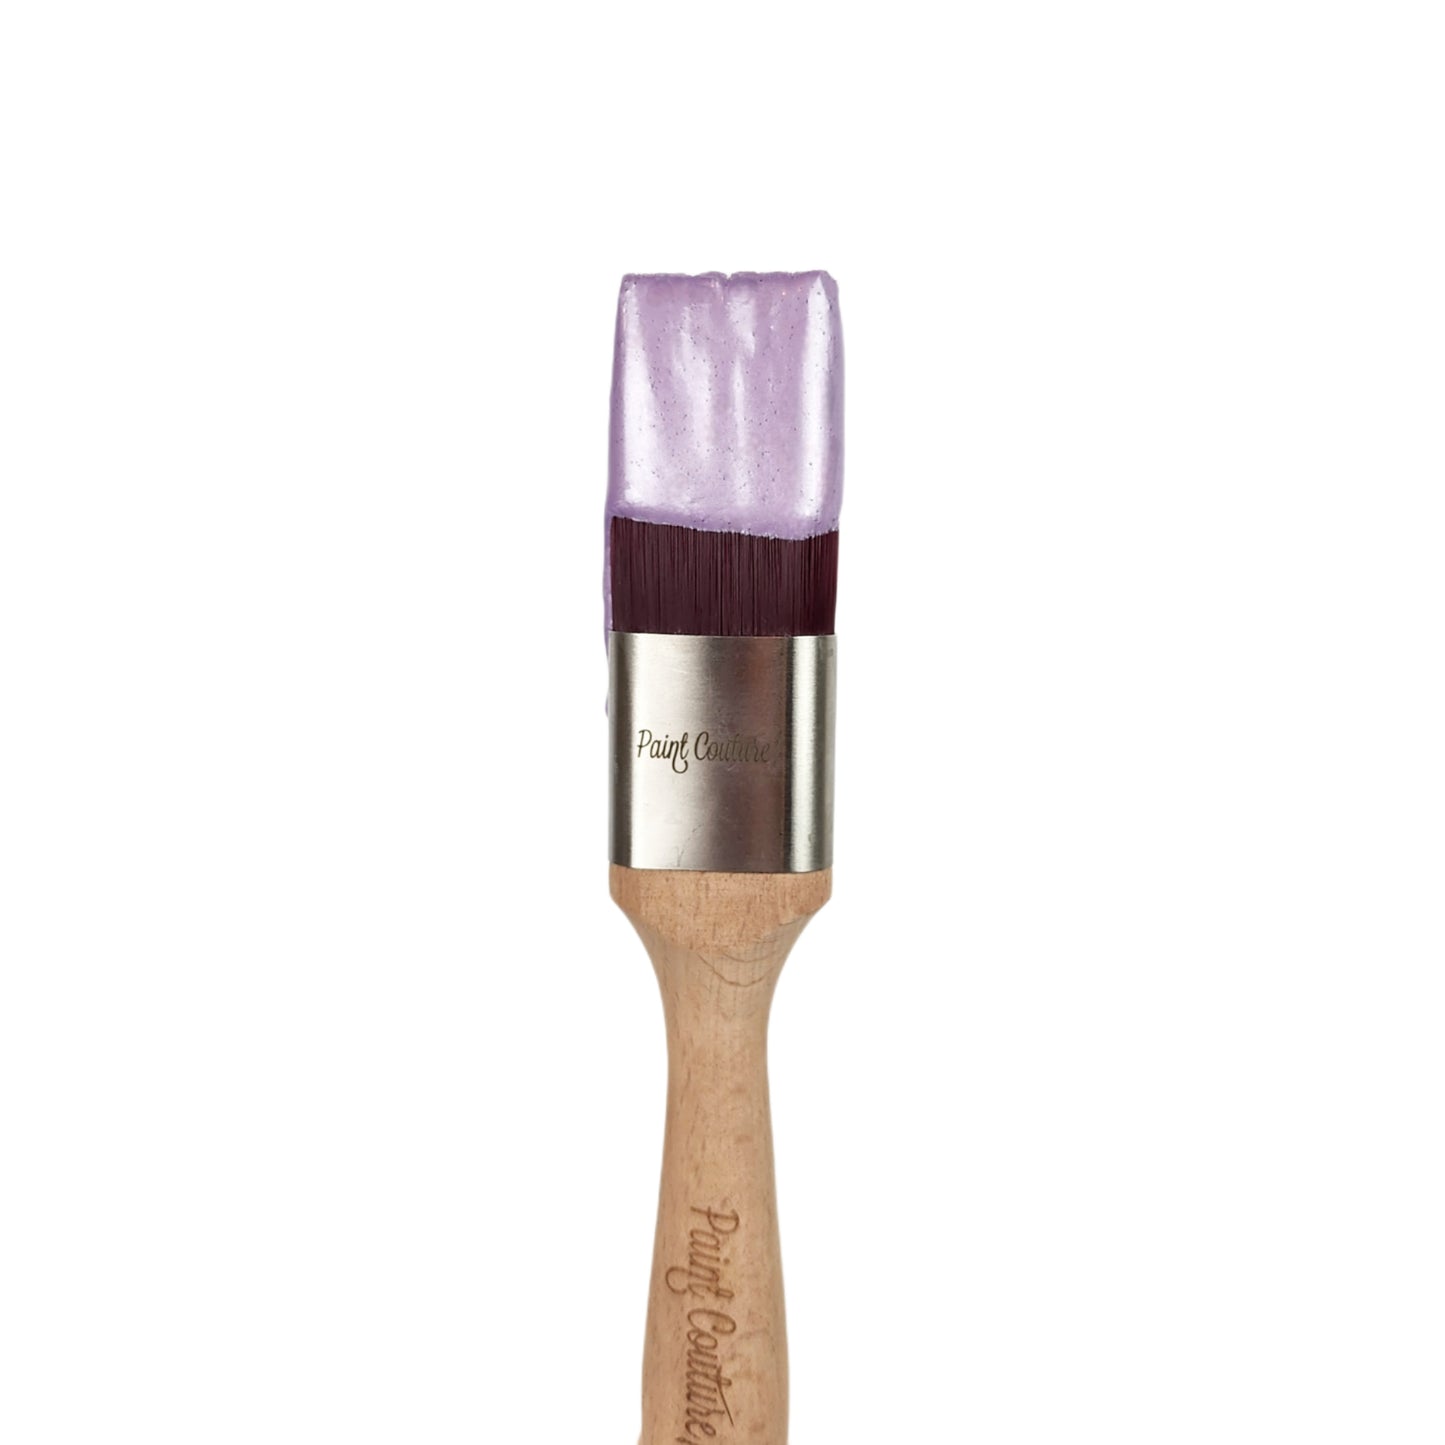 Paint Couture Lux Metallic Paint Lilac